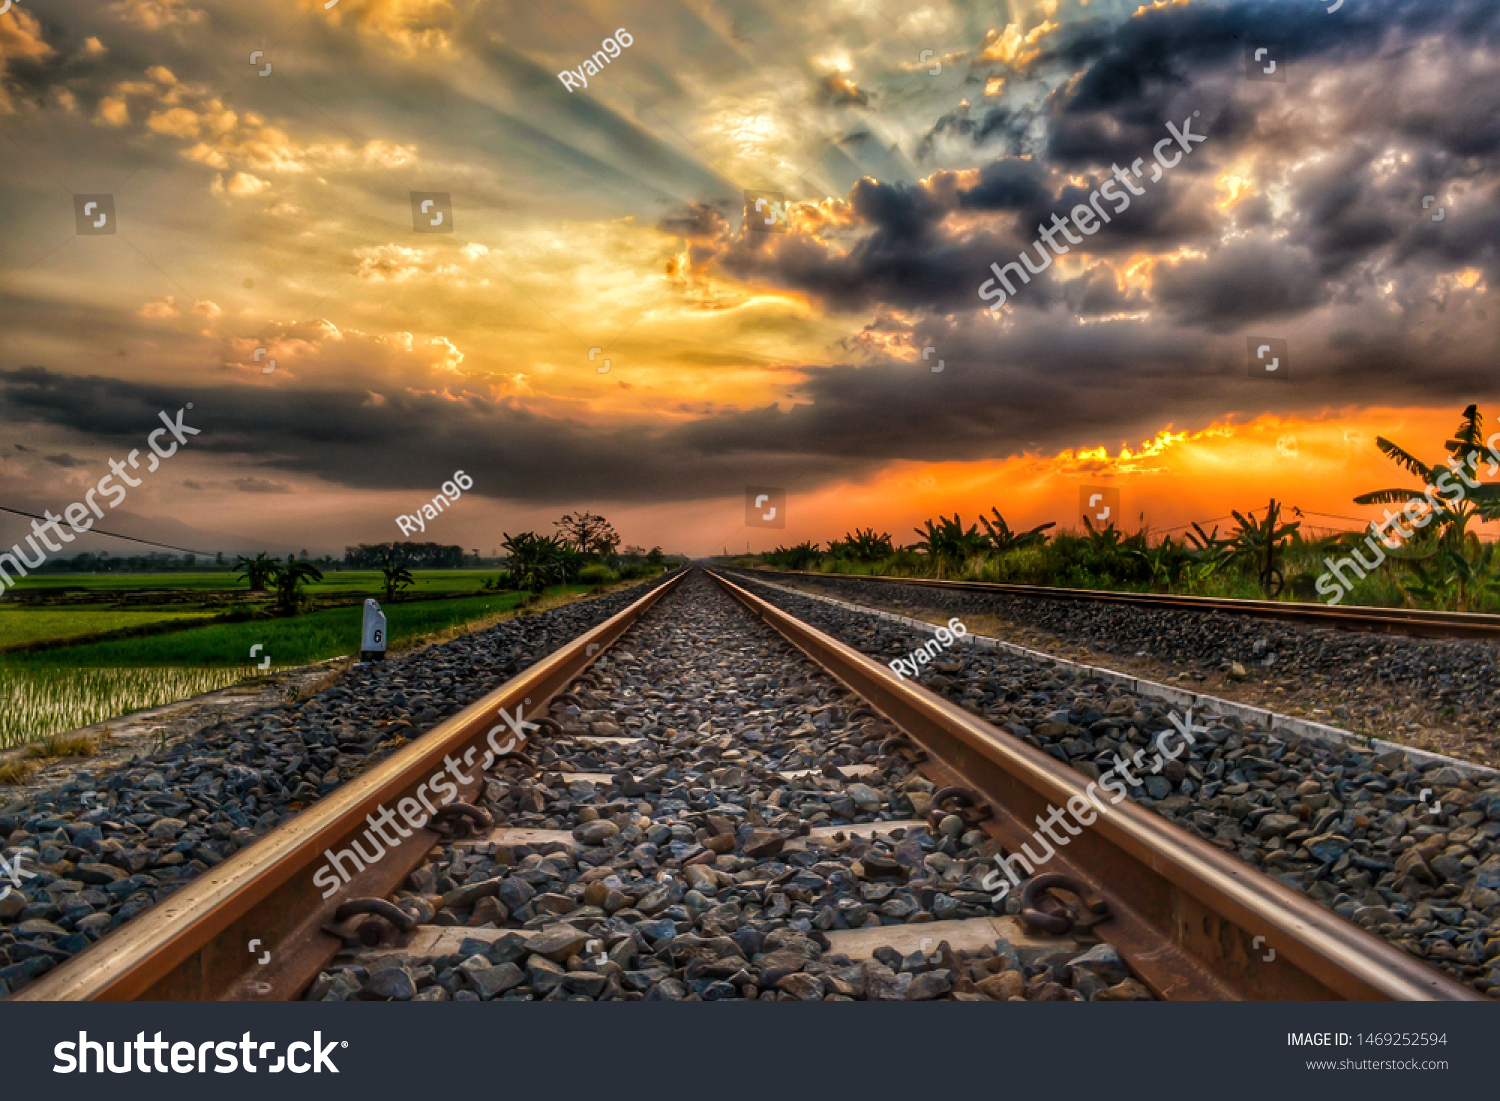 sunset in the rail road . take with nikon d3100 kitt lens #1469252594